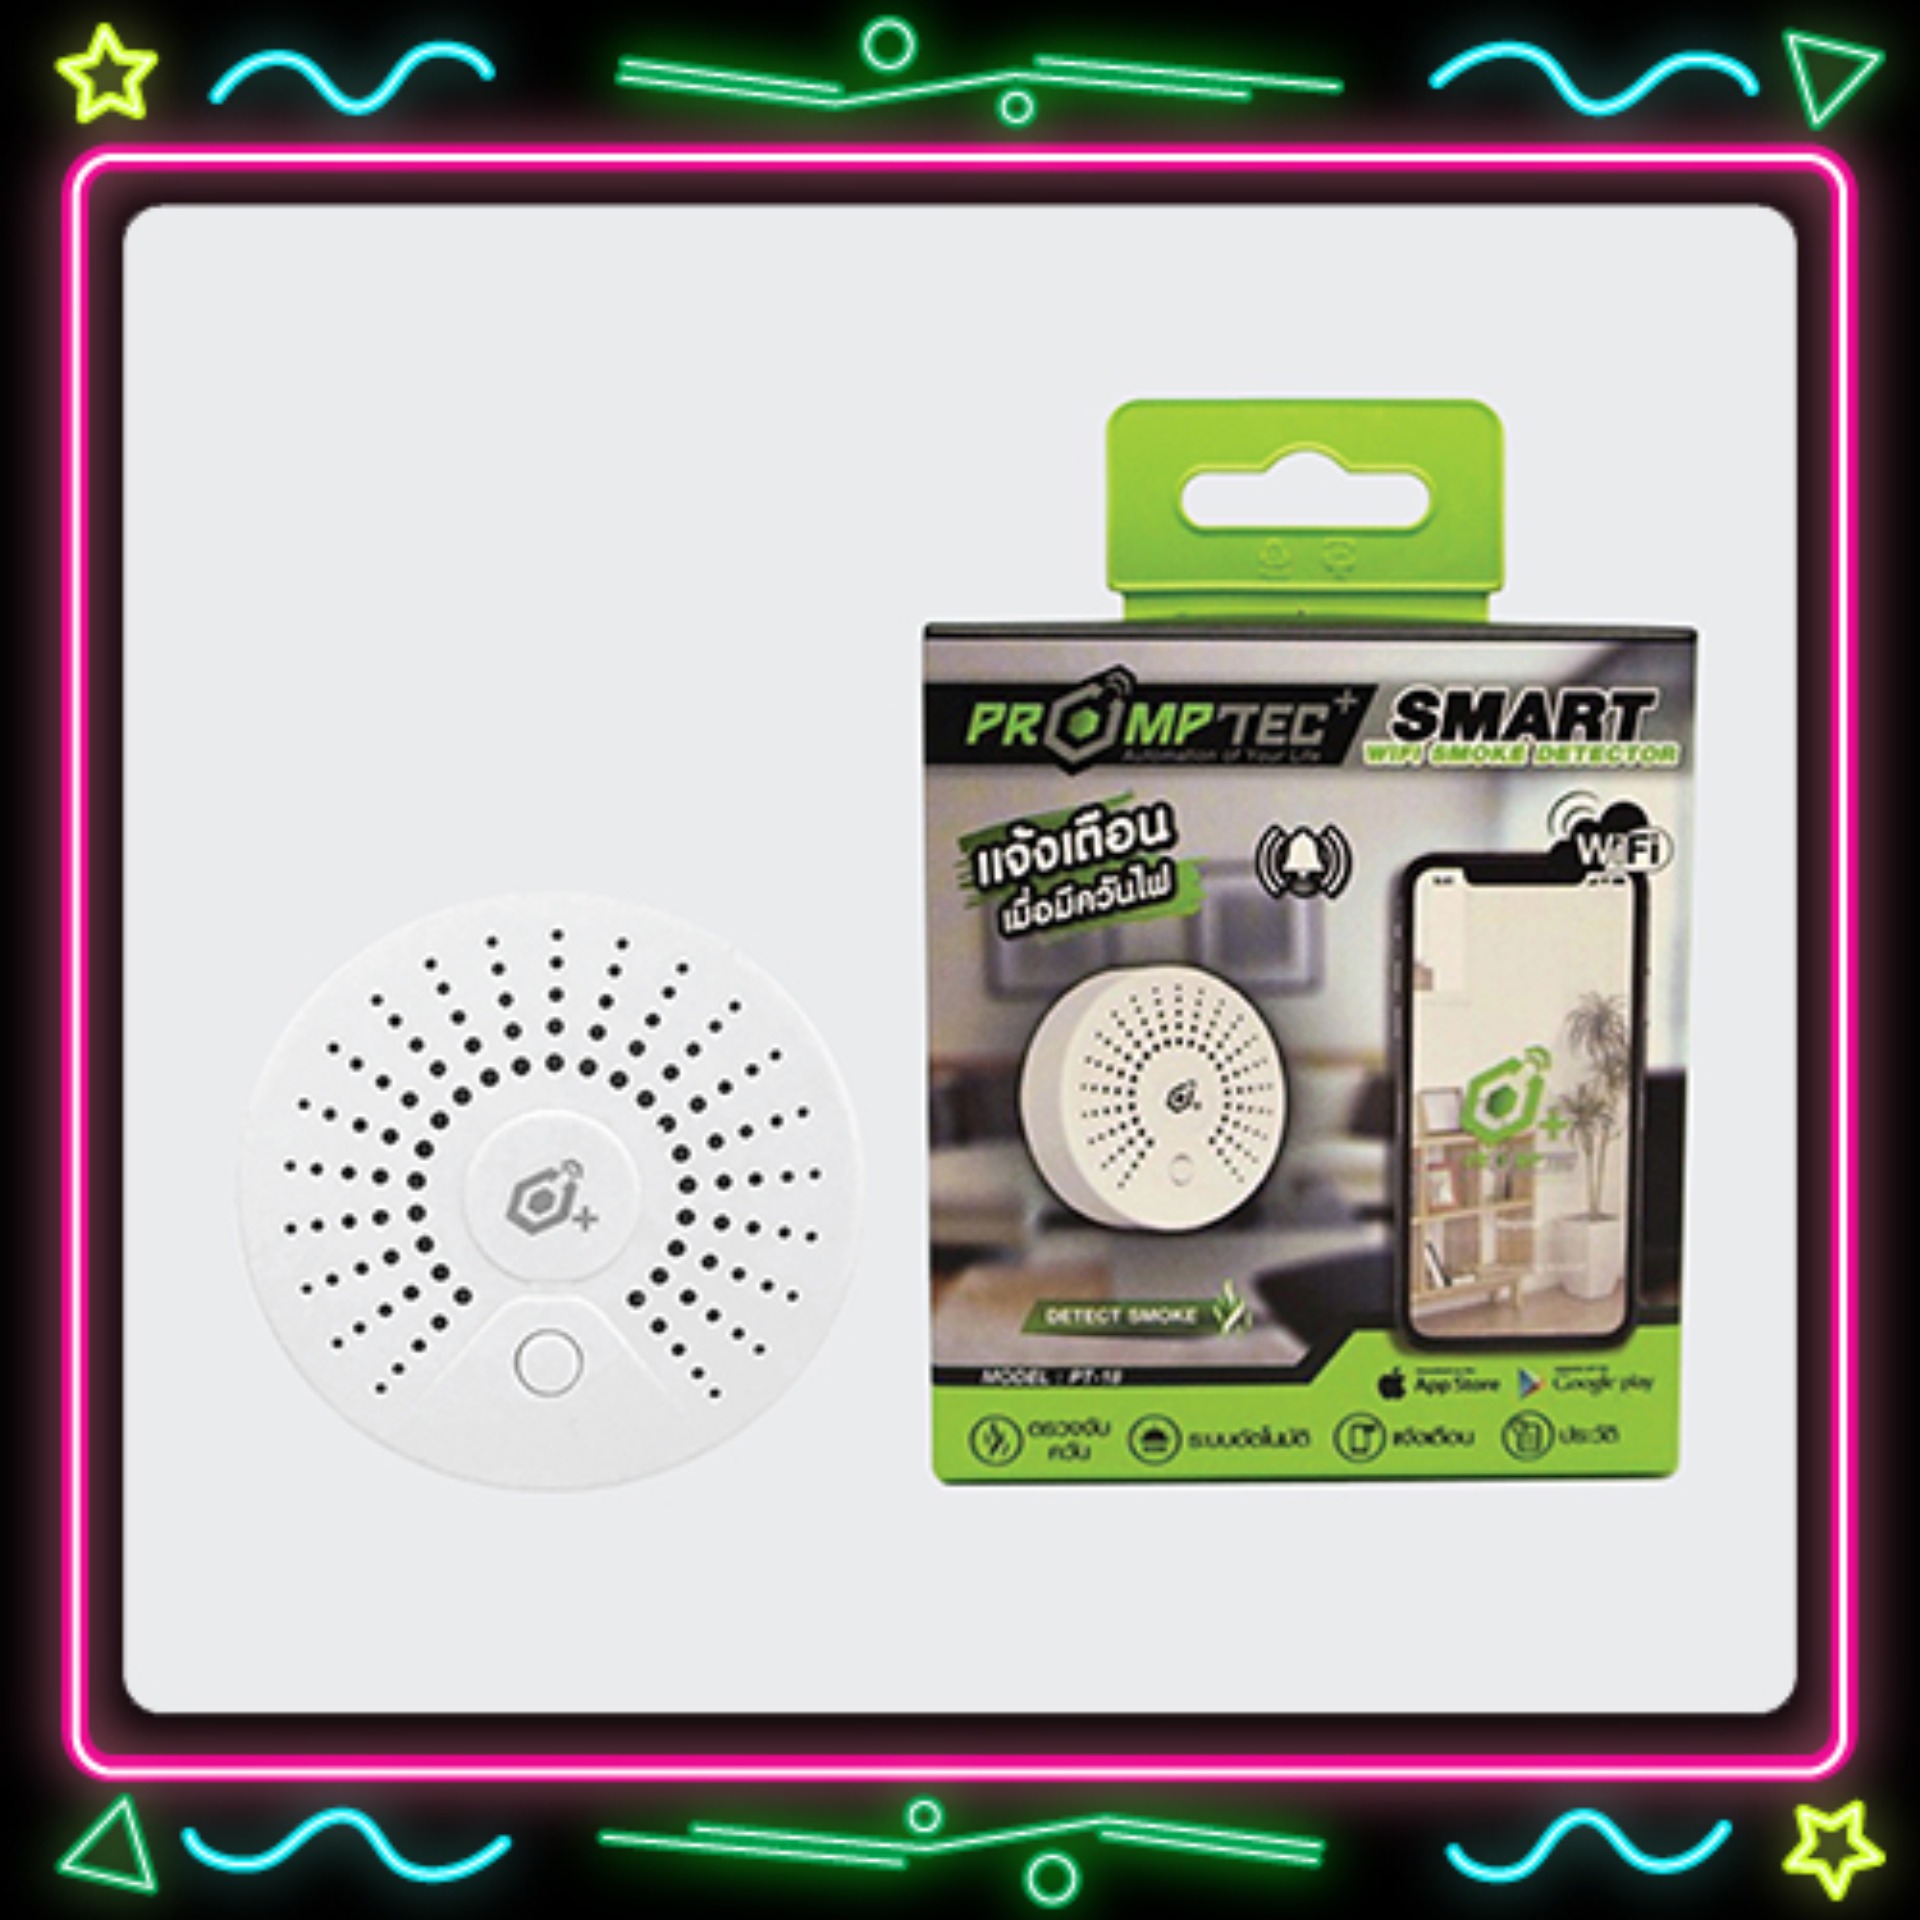 Smart Wifi Smoke Detector/Sensor PT-18 เซ็นเซอร์ตรวจจับควันอัตโนมัติ